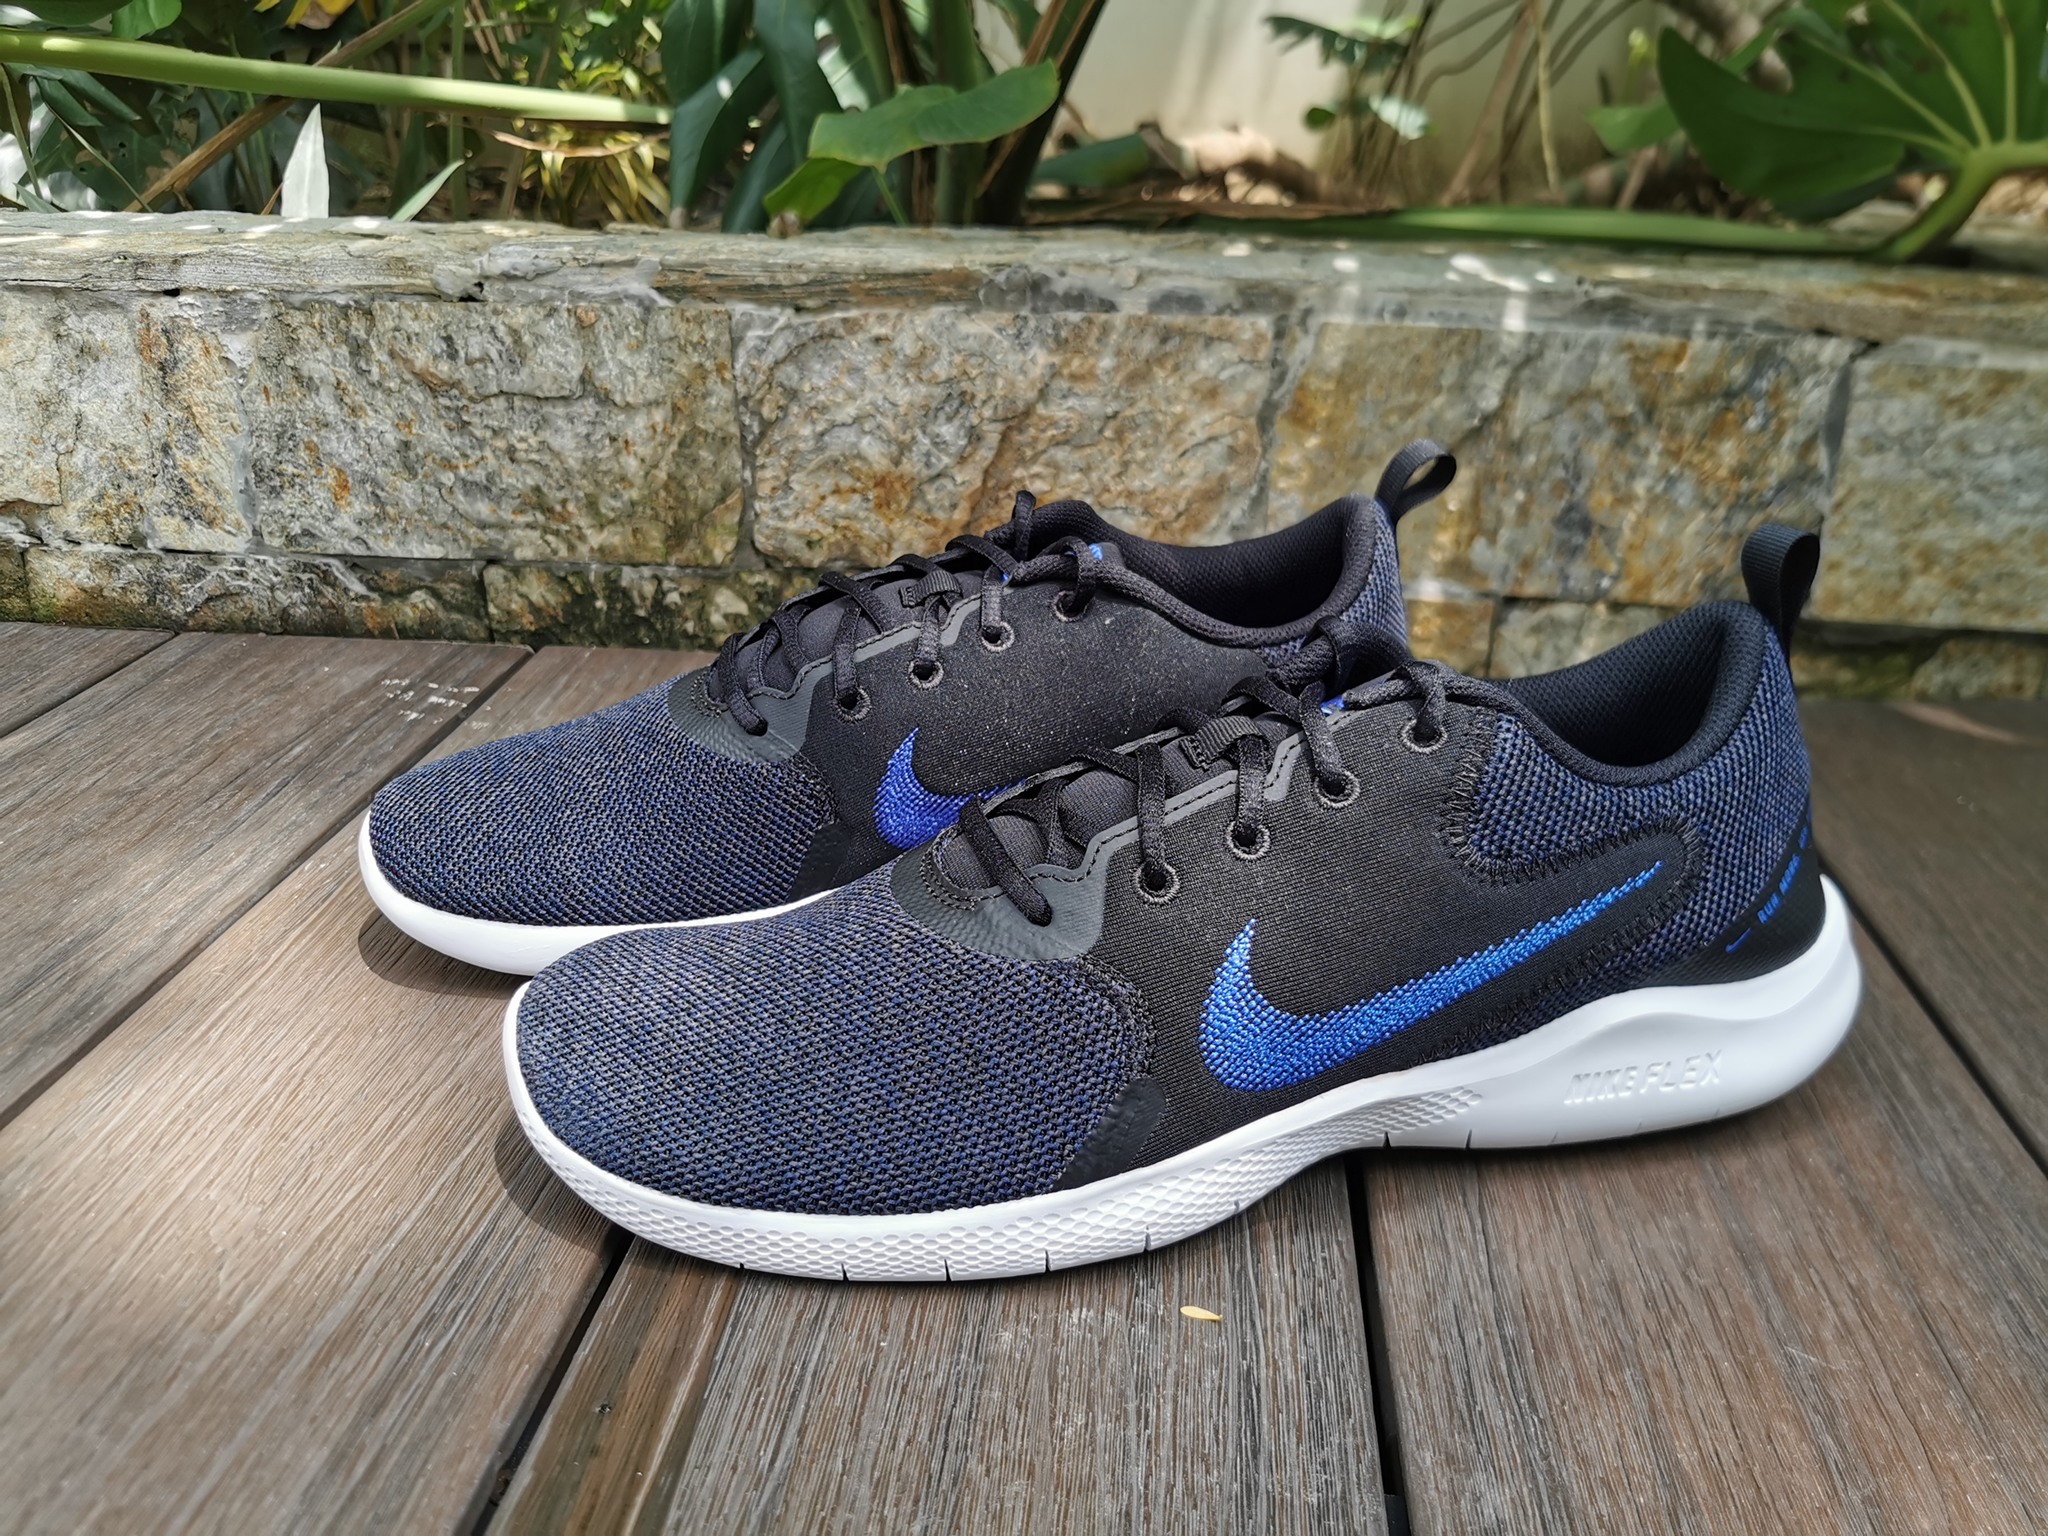 https://www.pinoyguyguide.com/wp-content/uploads/2021/08/Nike-Flex-Experience-RN-10-Mens-Running-Shoes-1.jpg